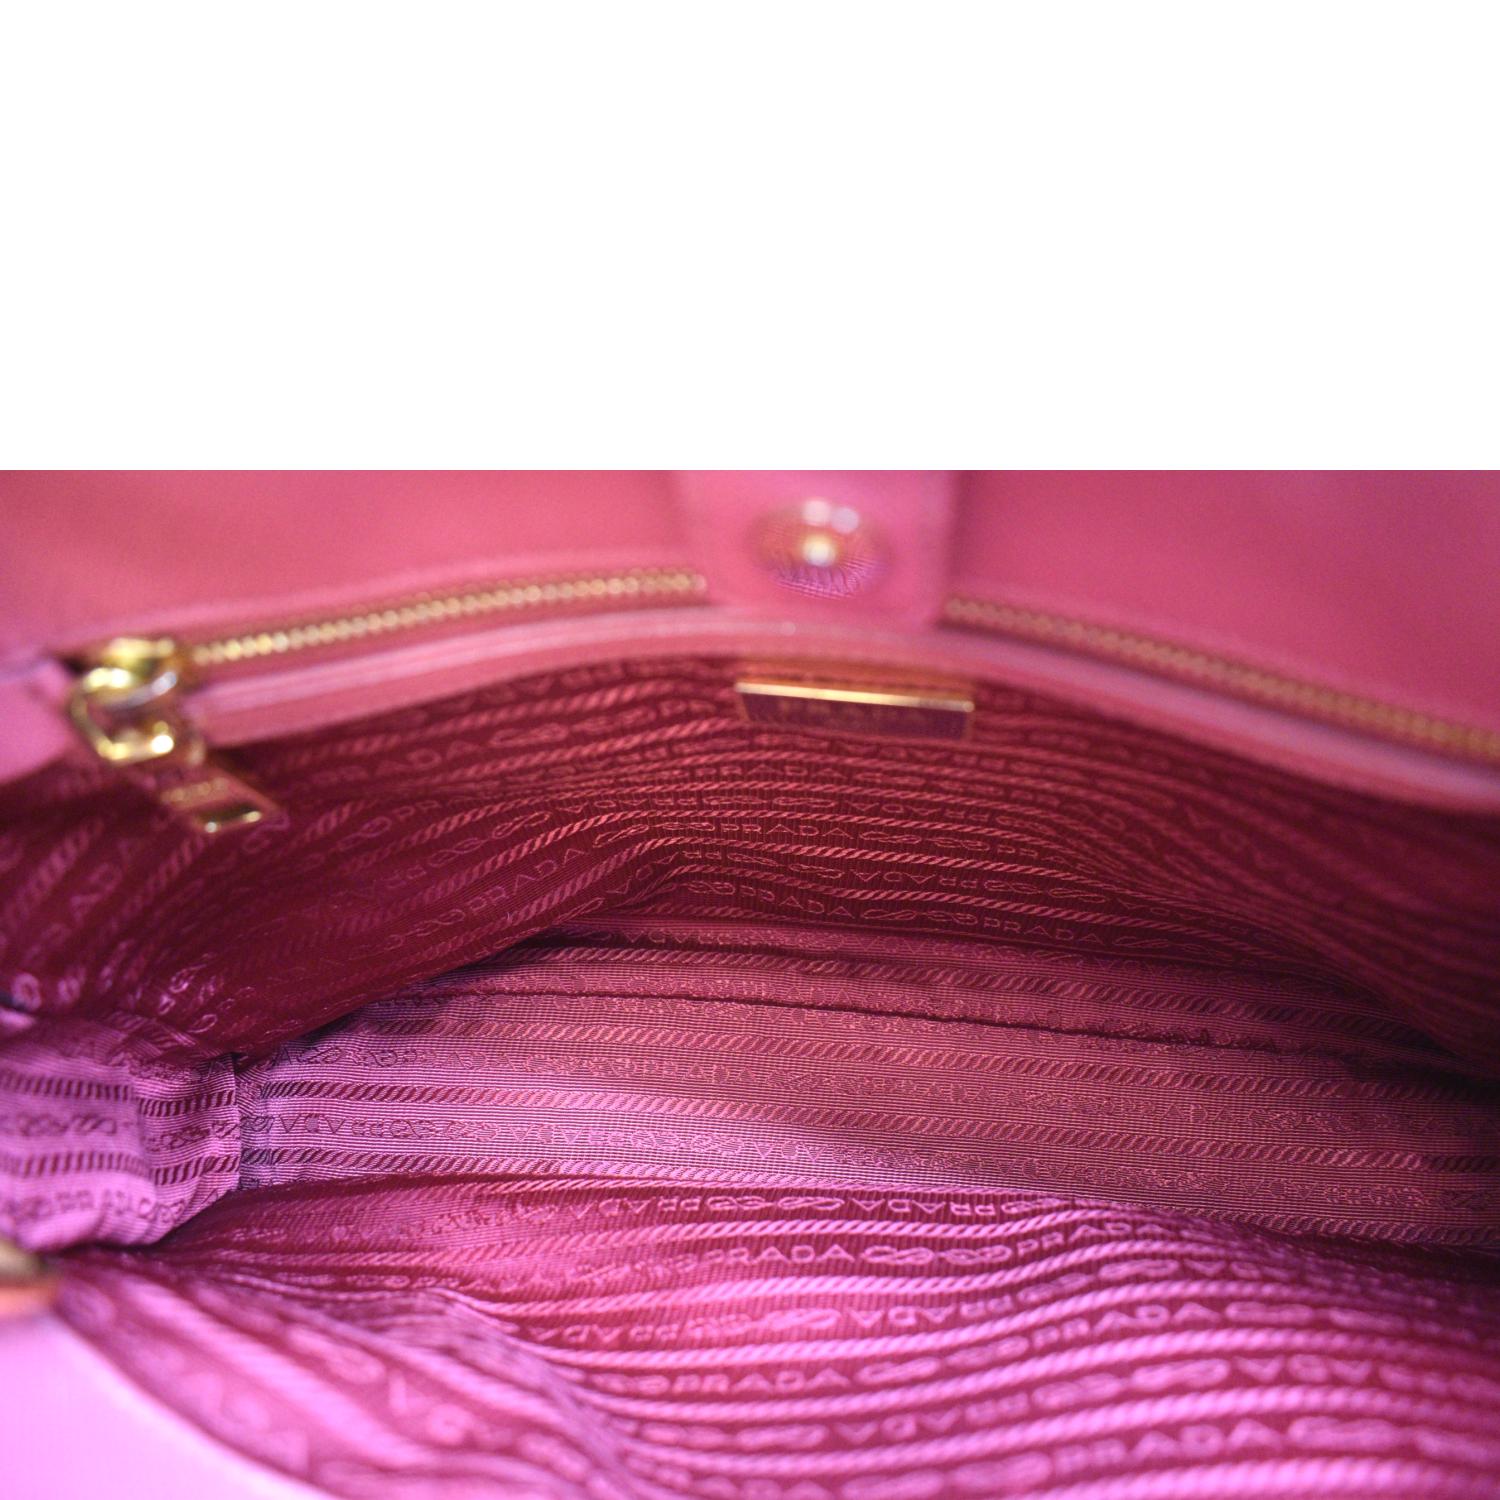 Large Prada Galleria Saffiano Leather Bag 1BA274, Red, One Size